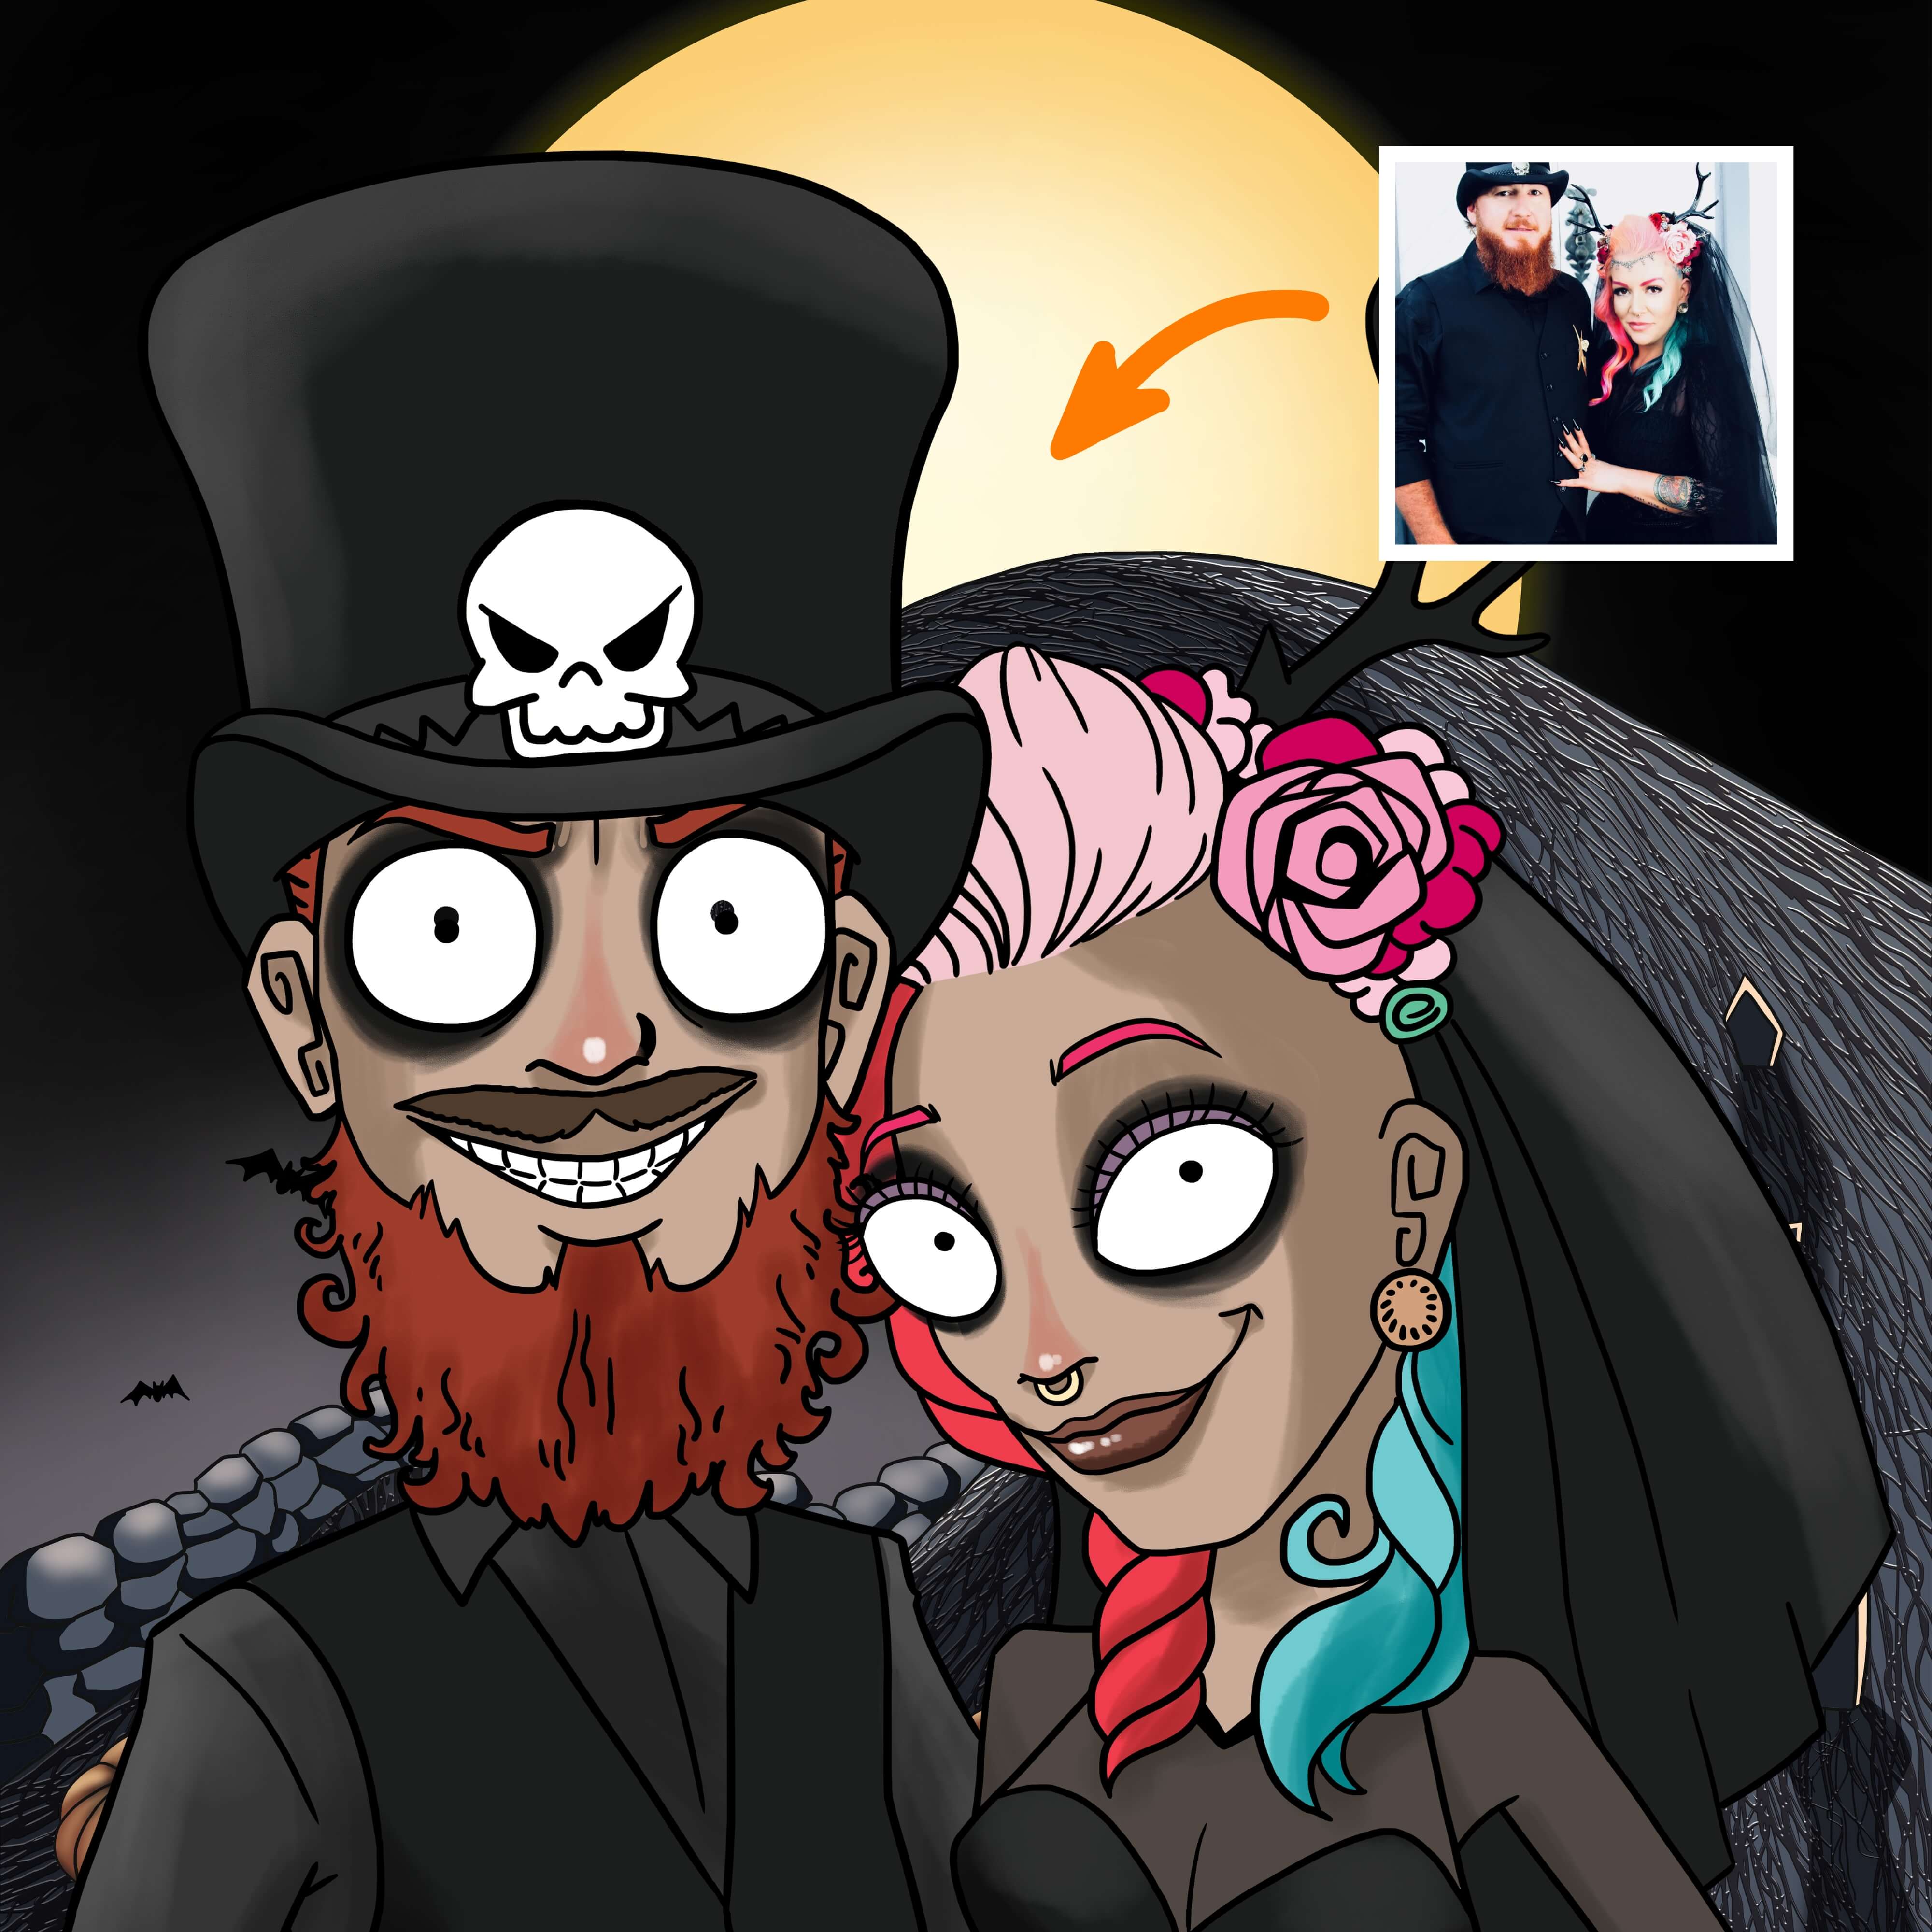 Get Spooky with Halloween Custom Portraits - Order Online at CartoonDeck